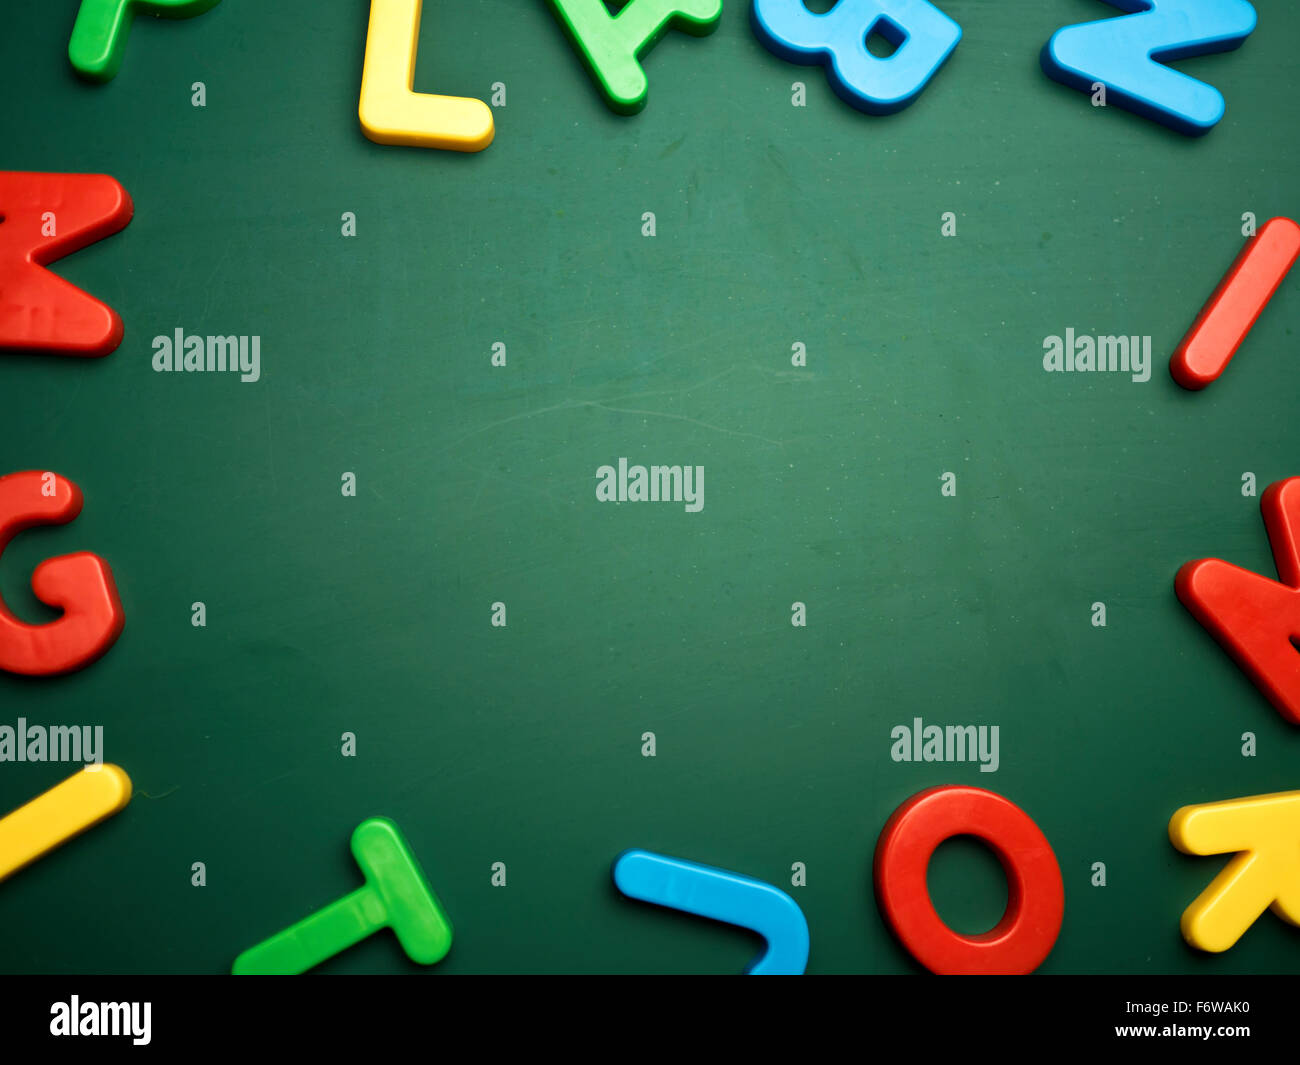 English alphabet background with space on blank blackboard Stock Photo